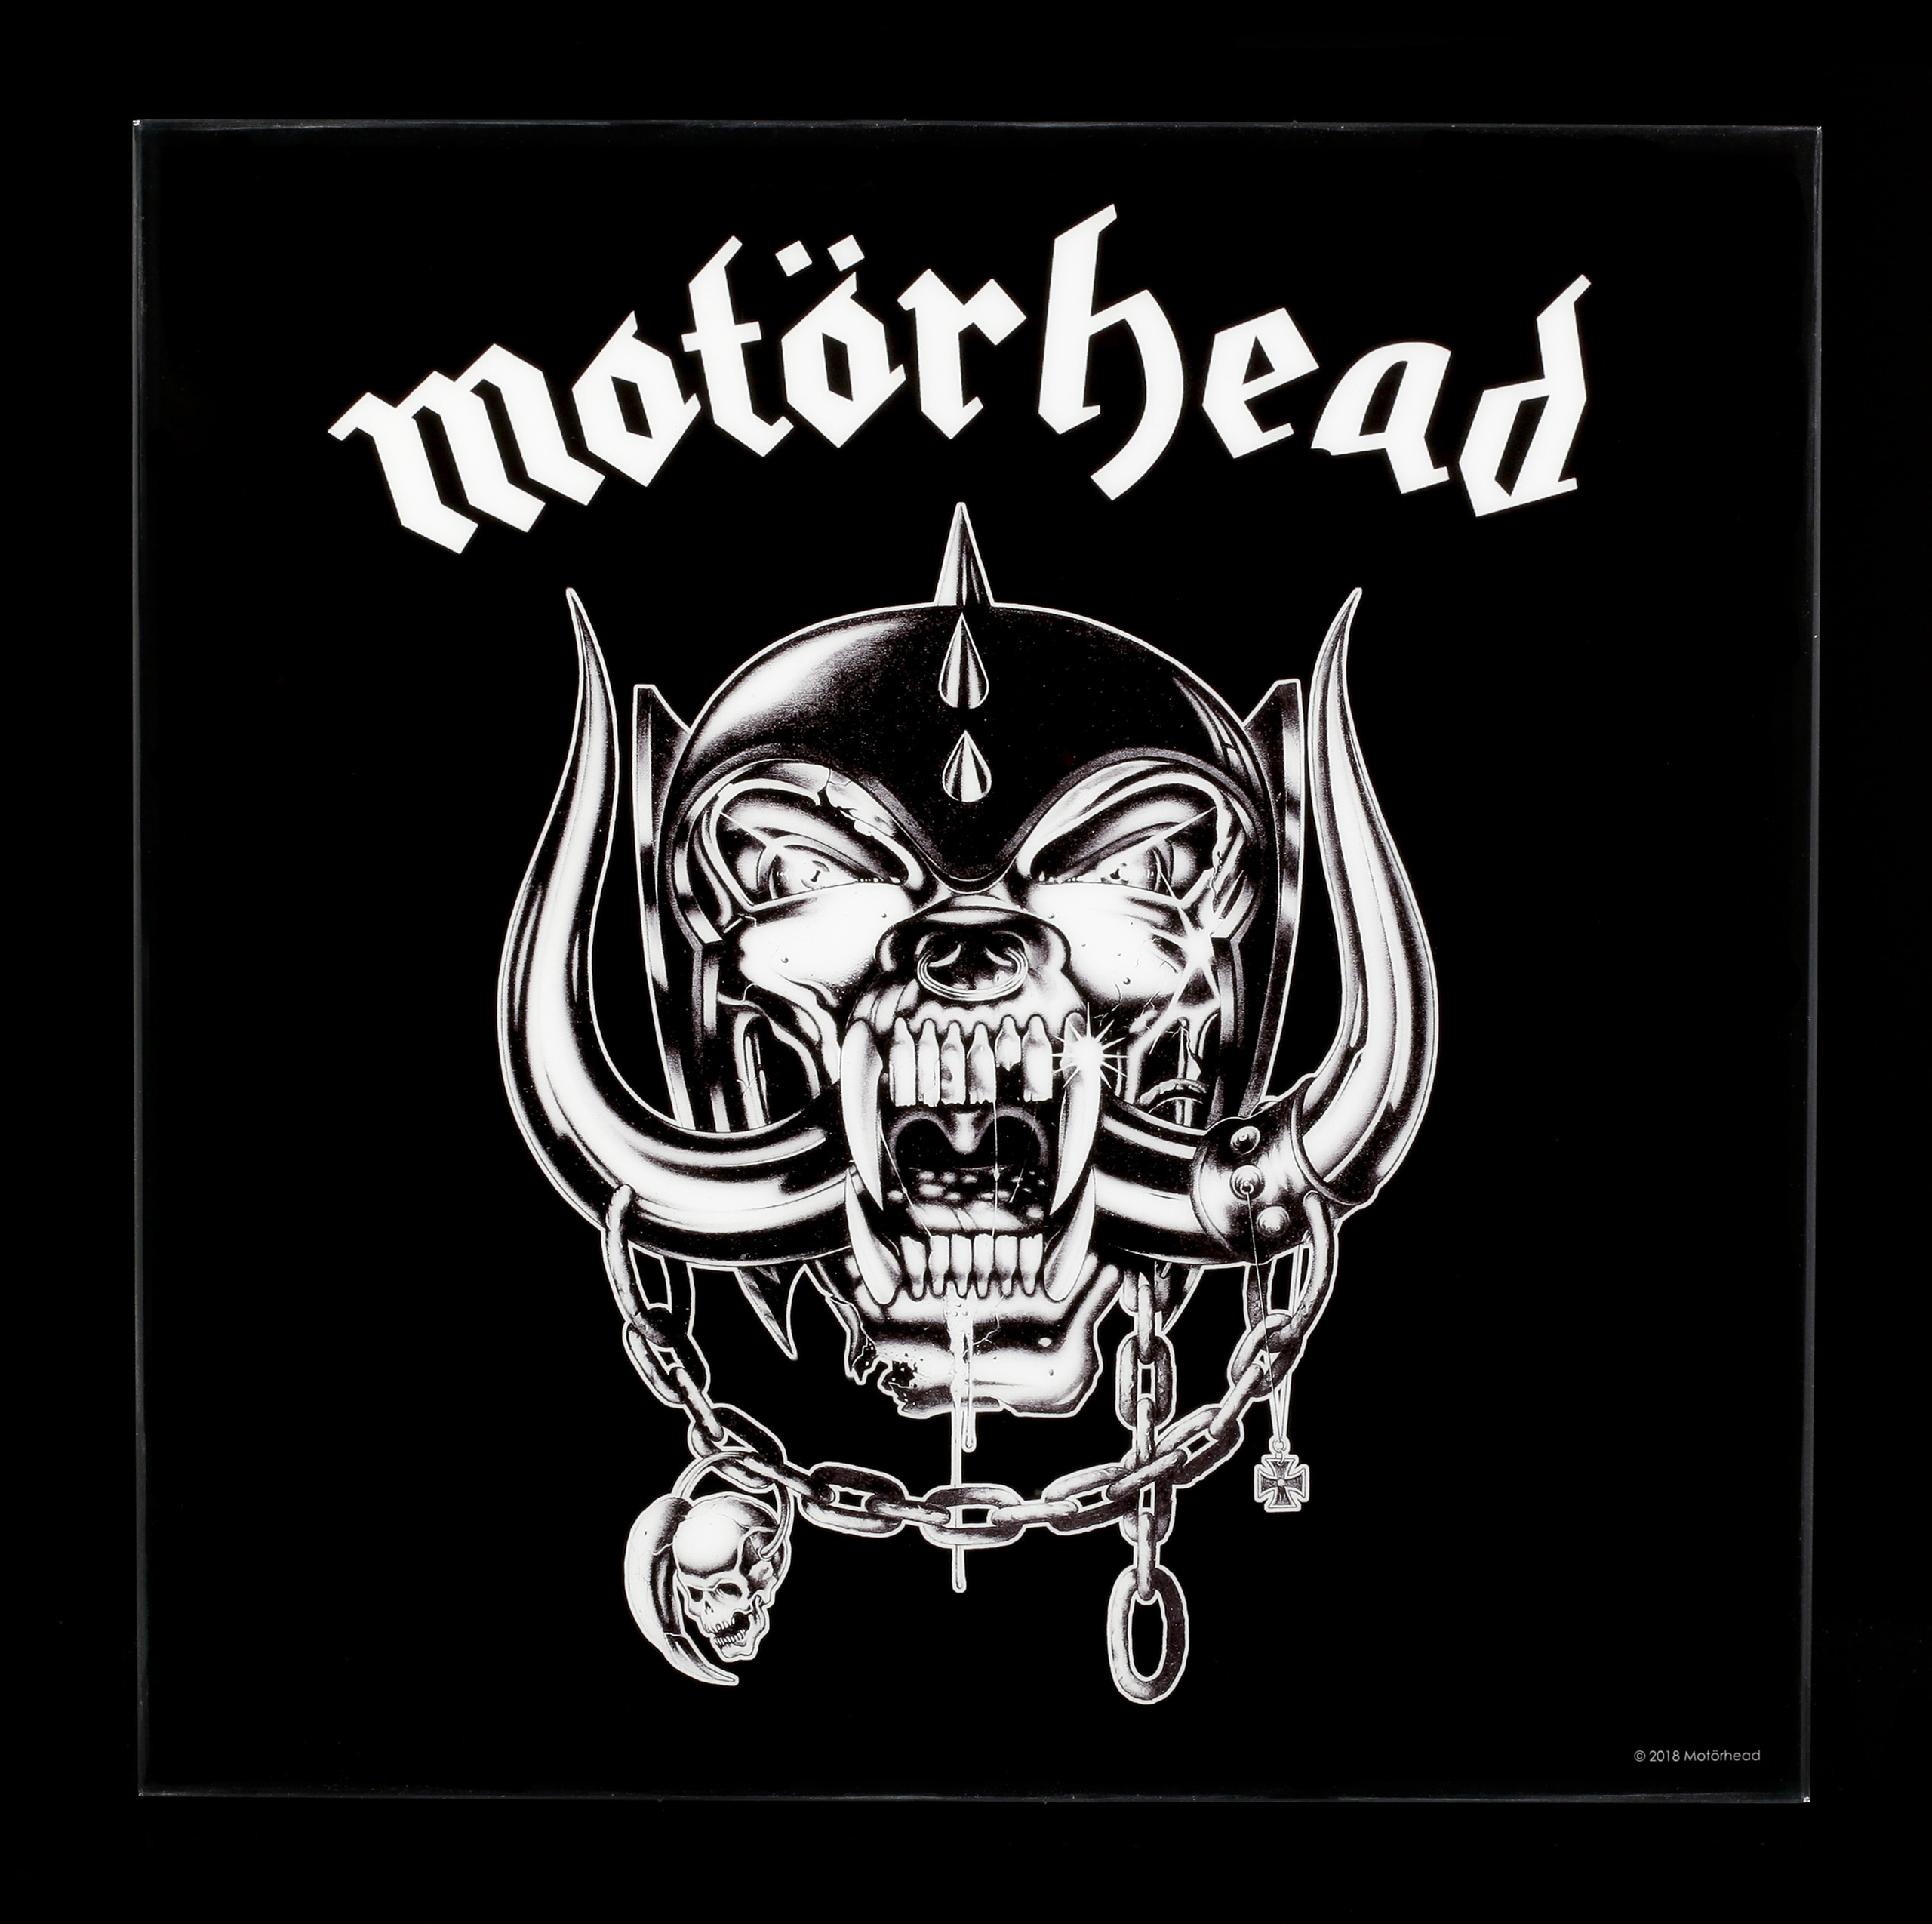 gr8 band logos Motoerhead-Hochglaz-Bild-Logo-Album-Artwork